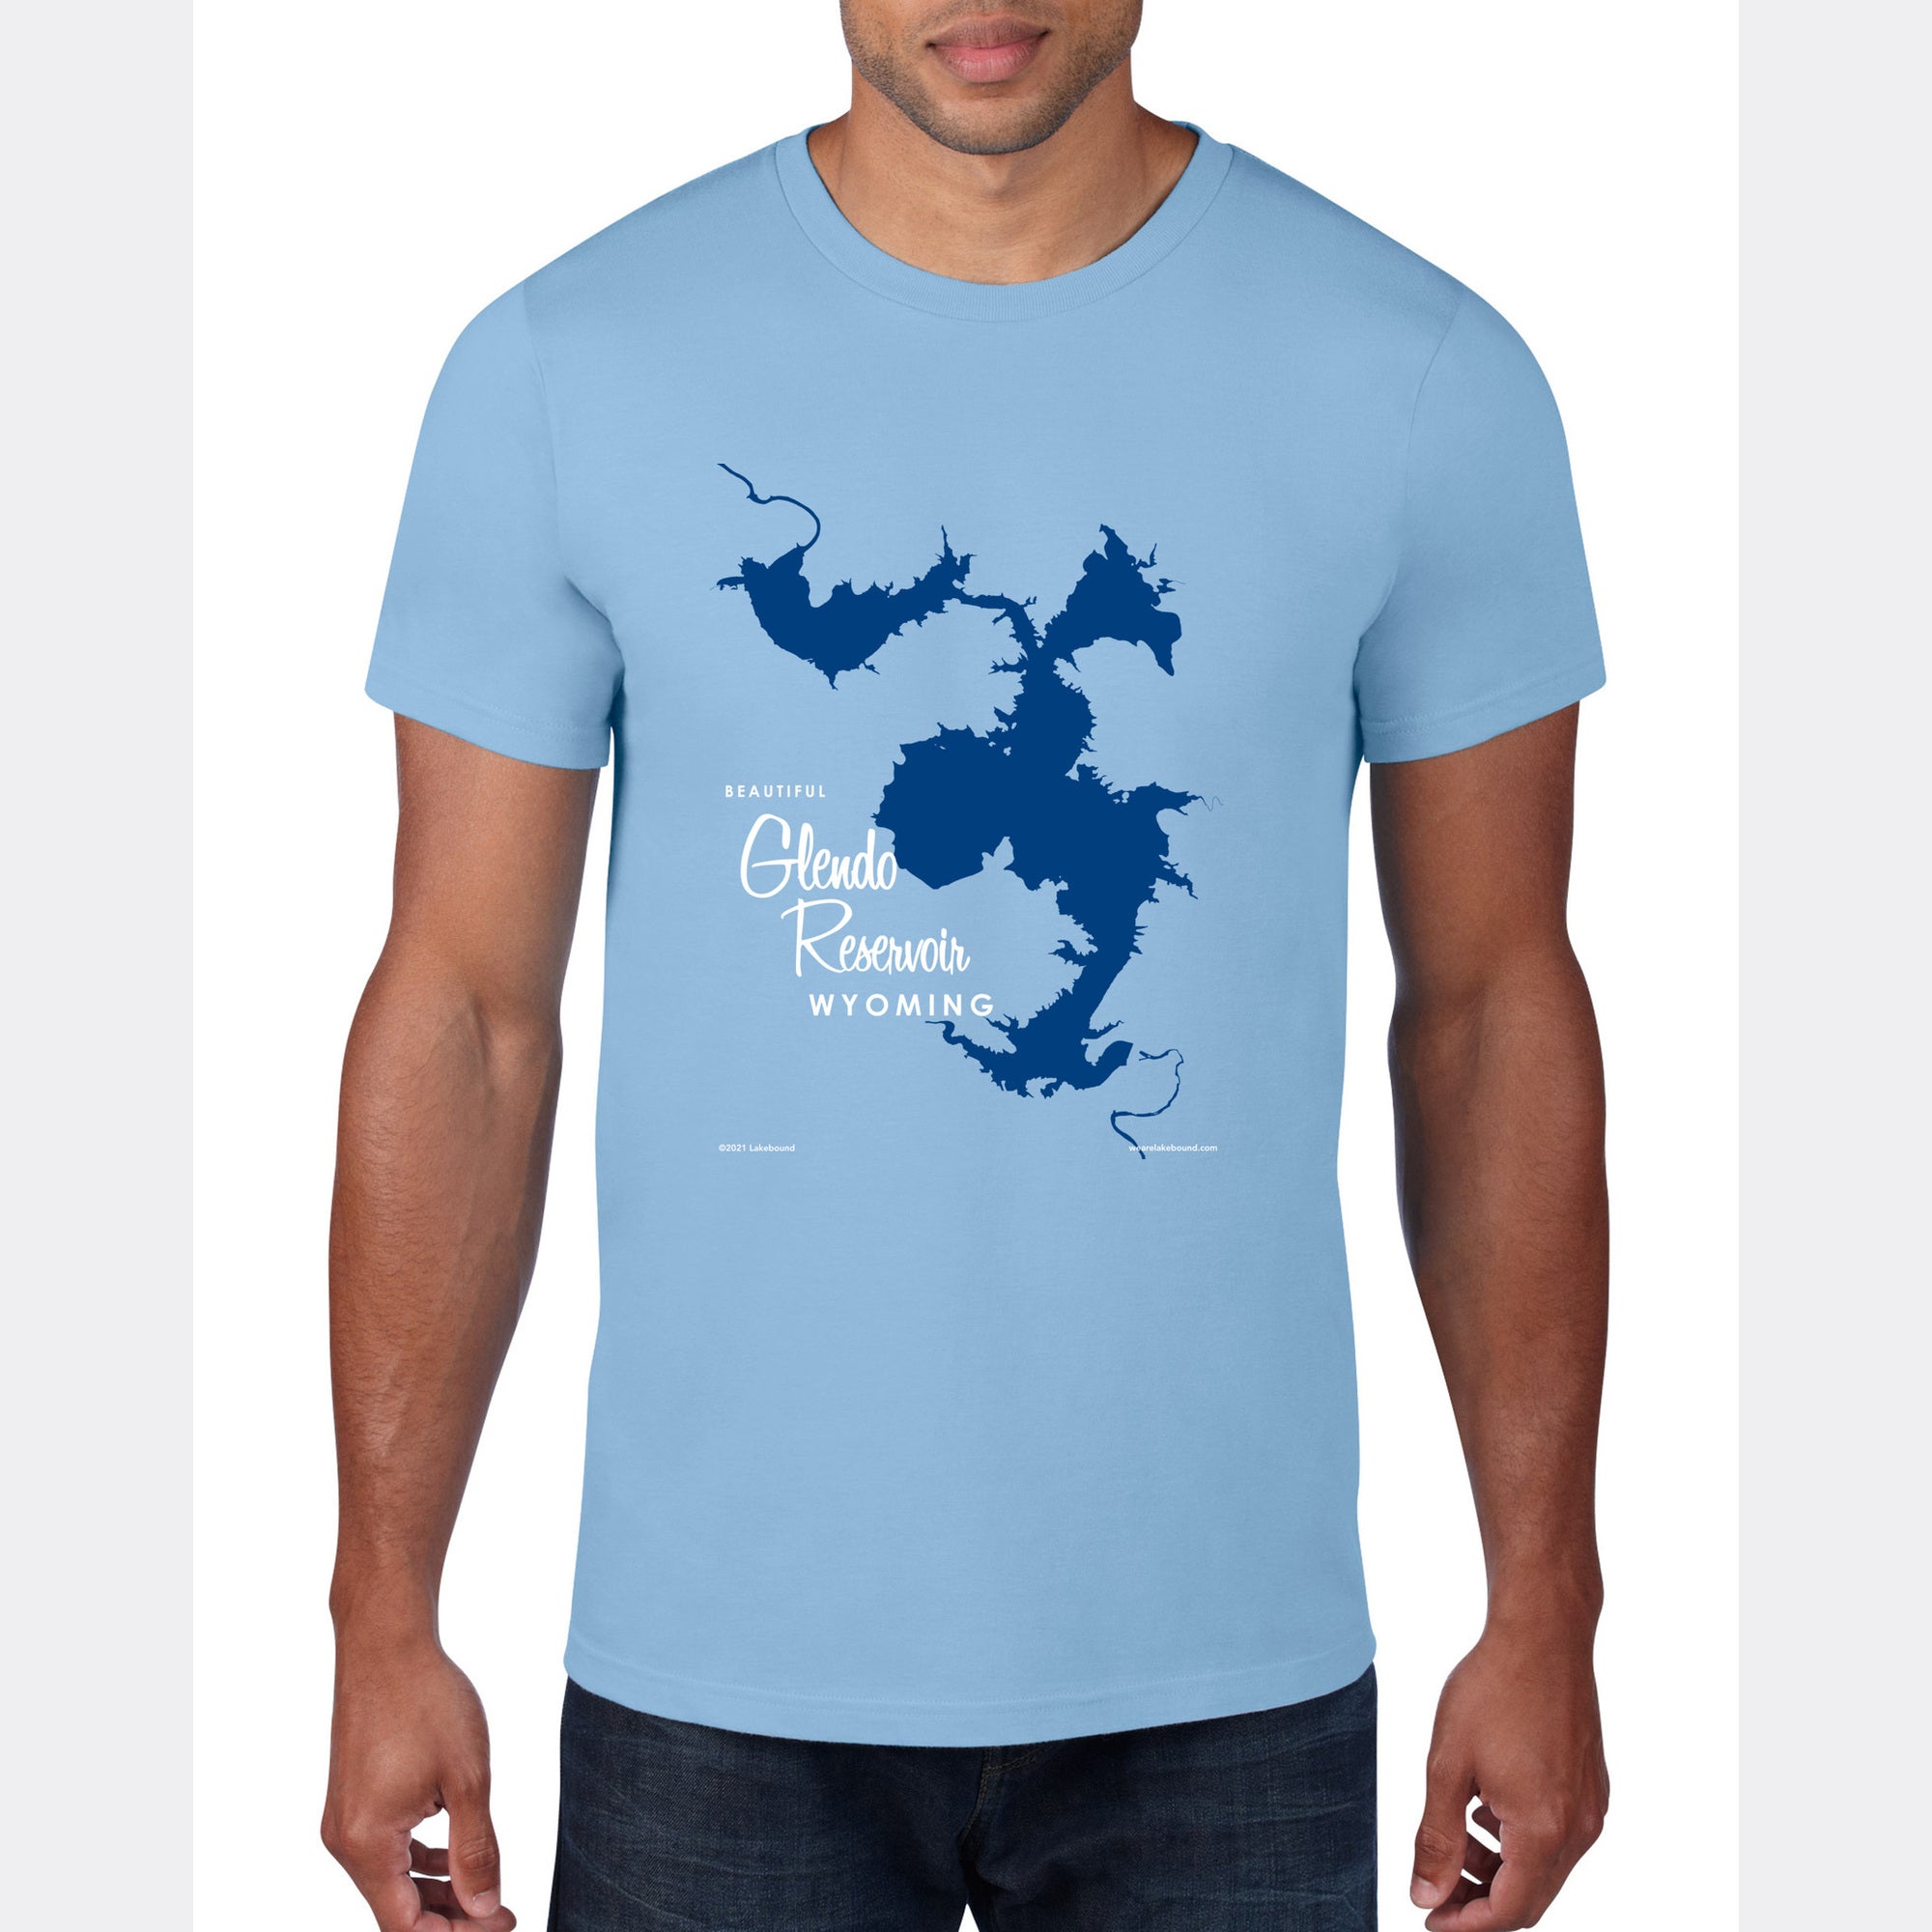 Glendo Reservoir Wyoming, T-Shirt